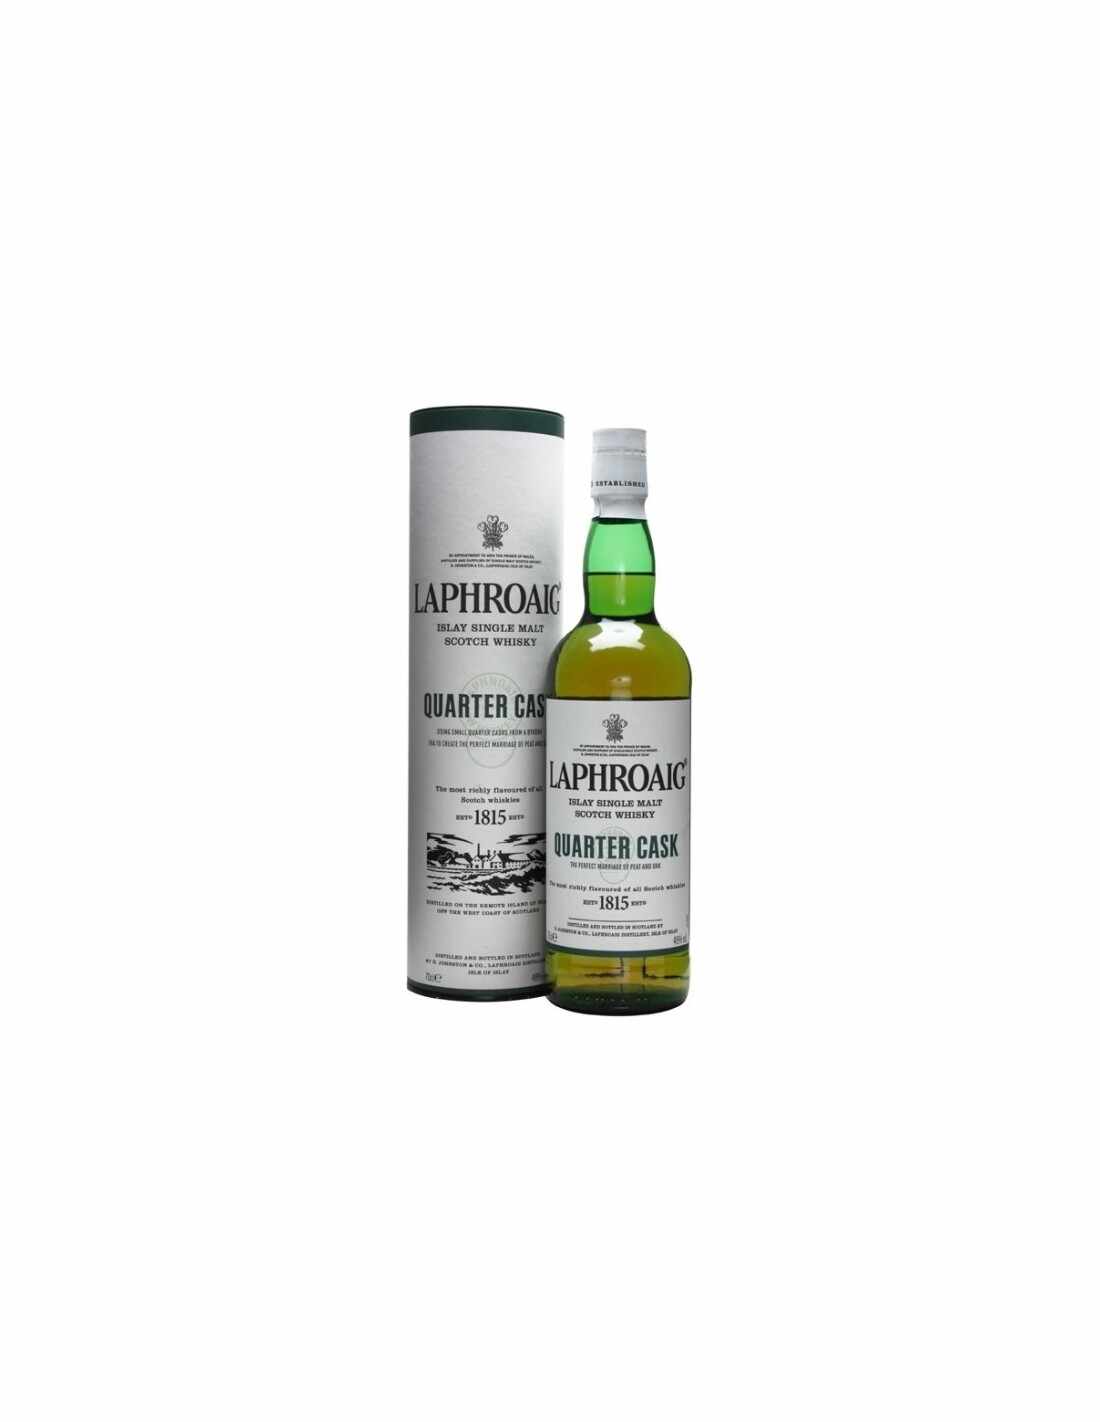 Whisky Laphroaig Quarter Cask, 0.7L, 48% alc., Scotia